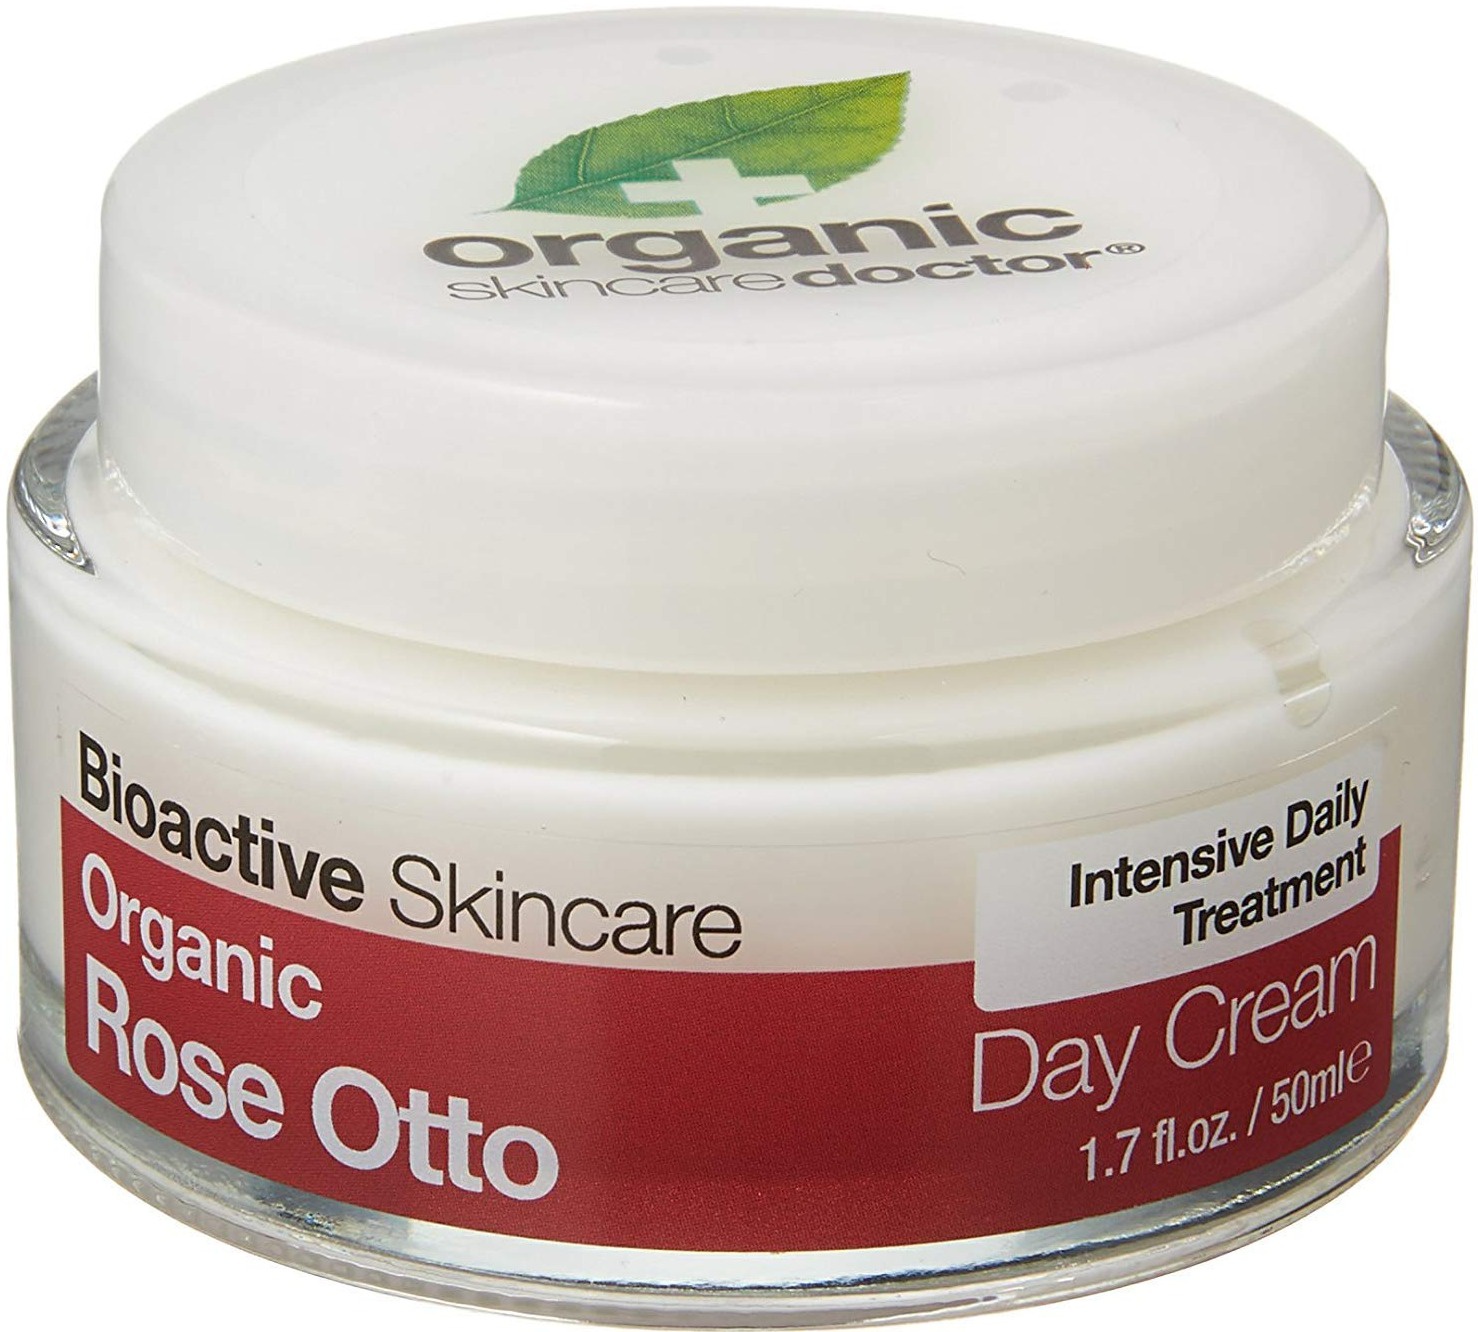 Dr Organic Organic Rose Otto Day Cream